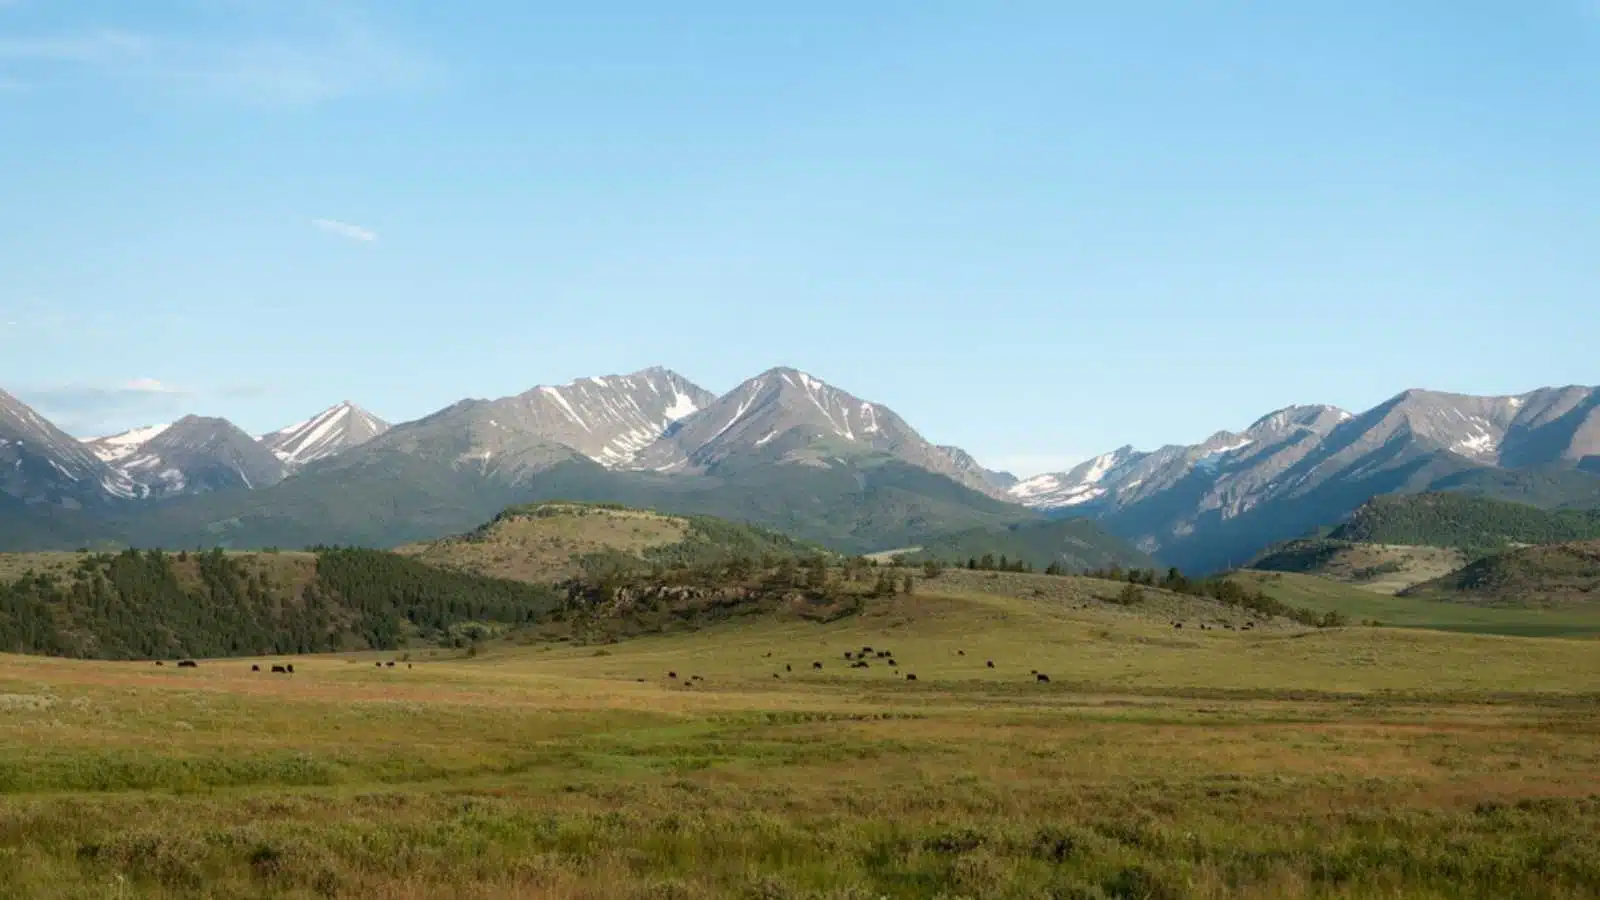 Crazy Mountain Range in Montana